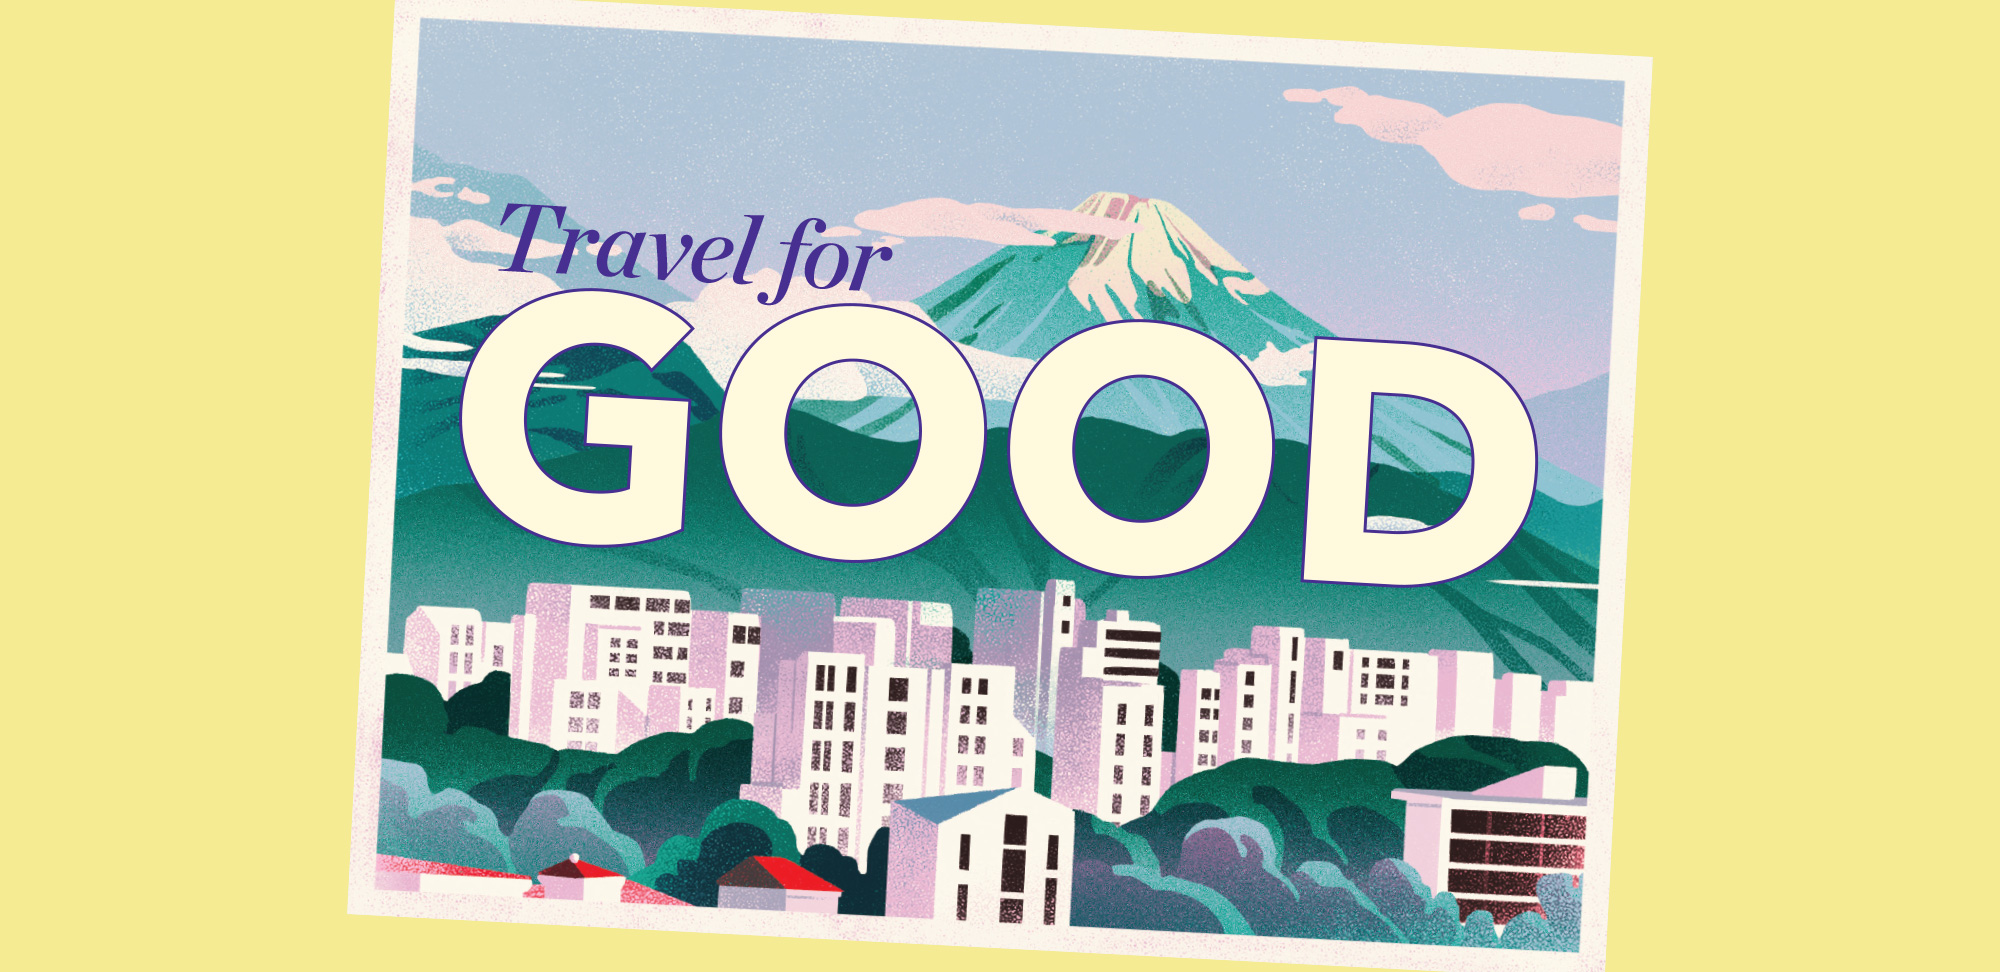 Travel for good